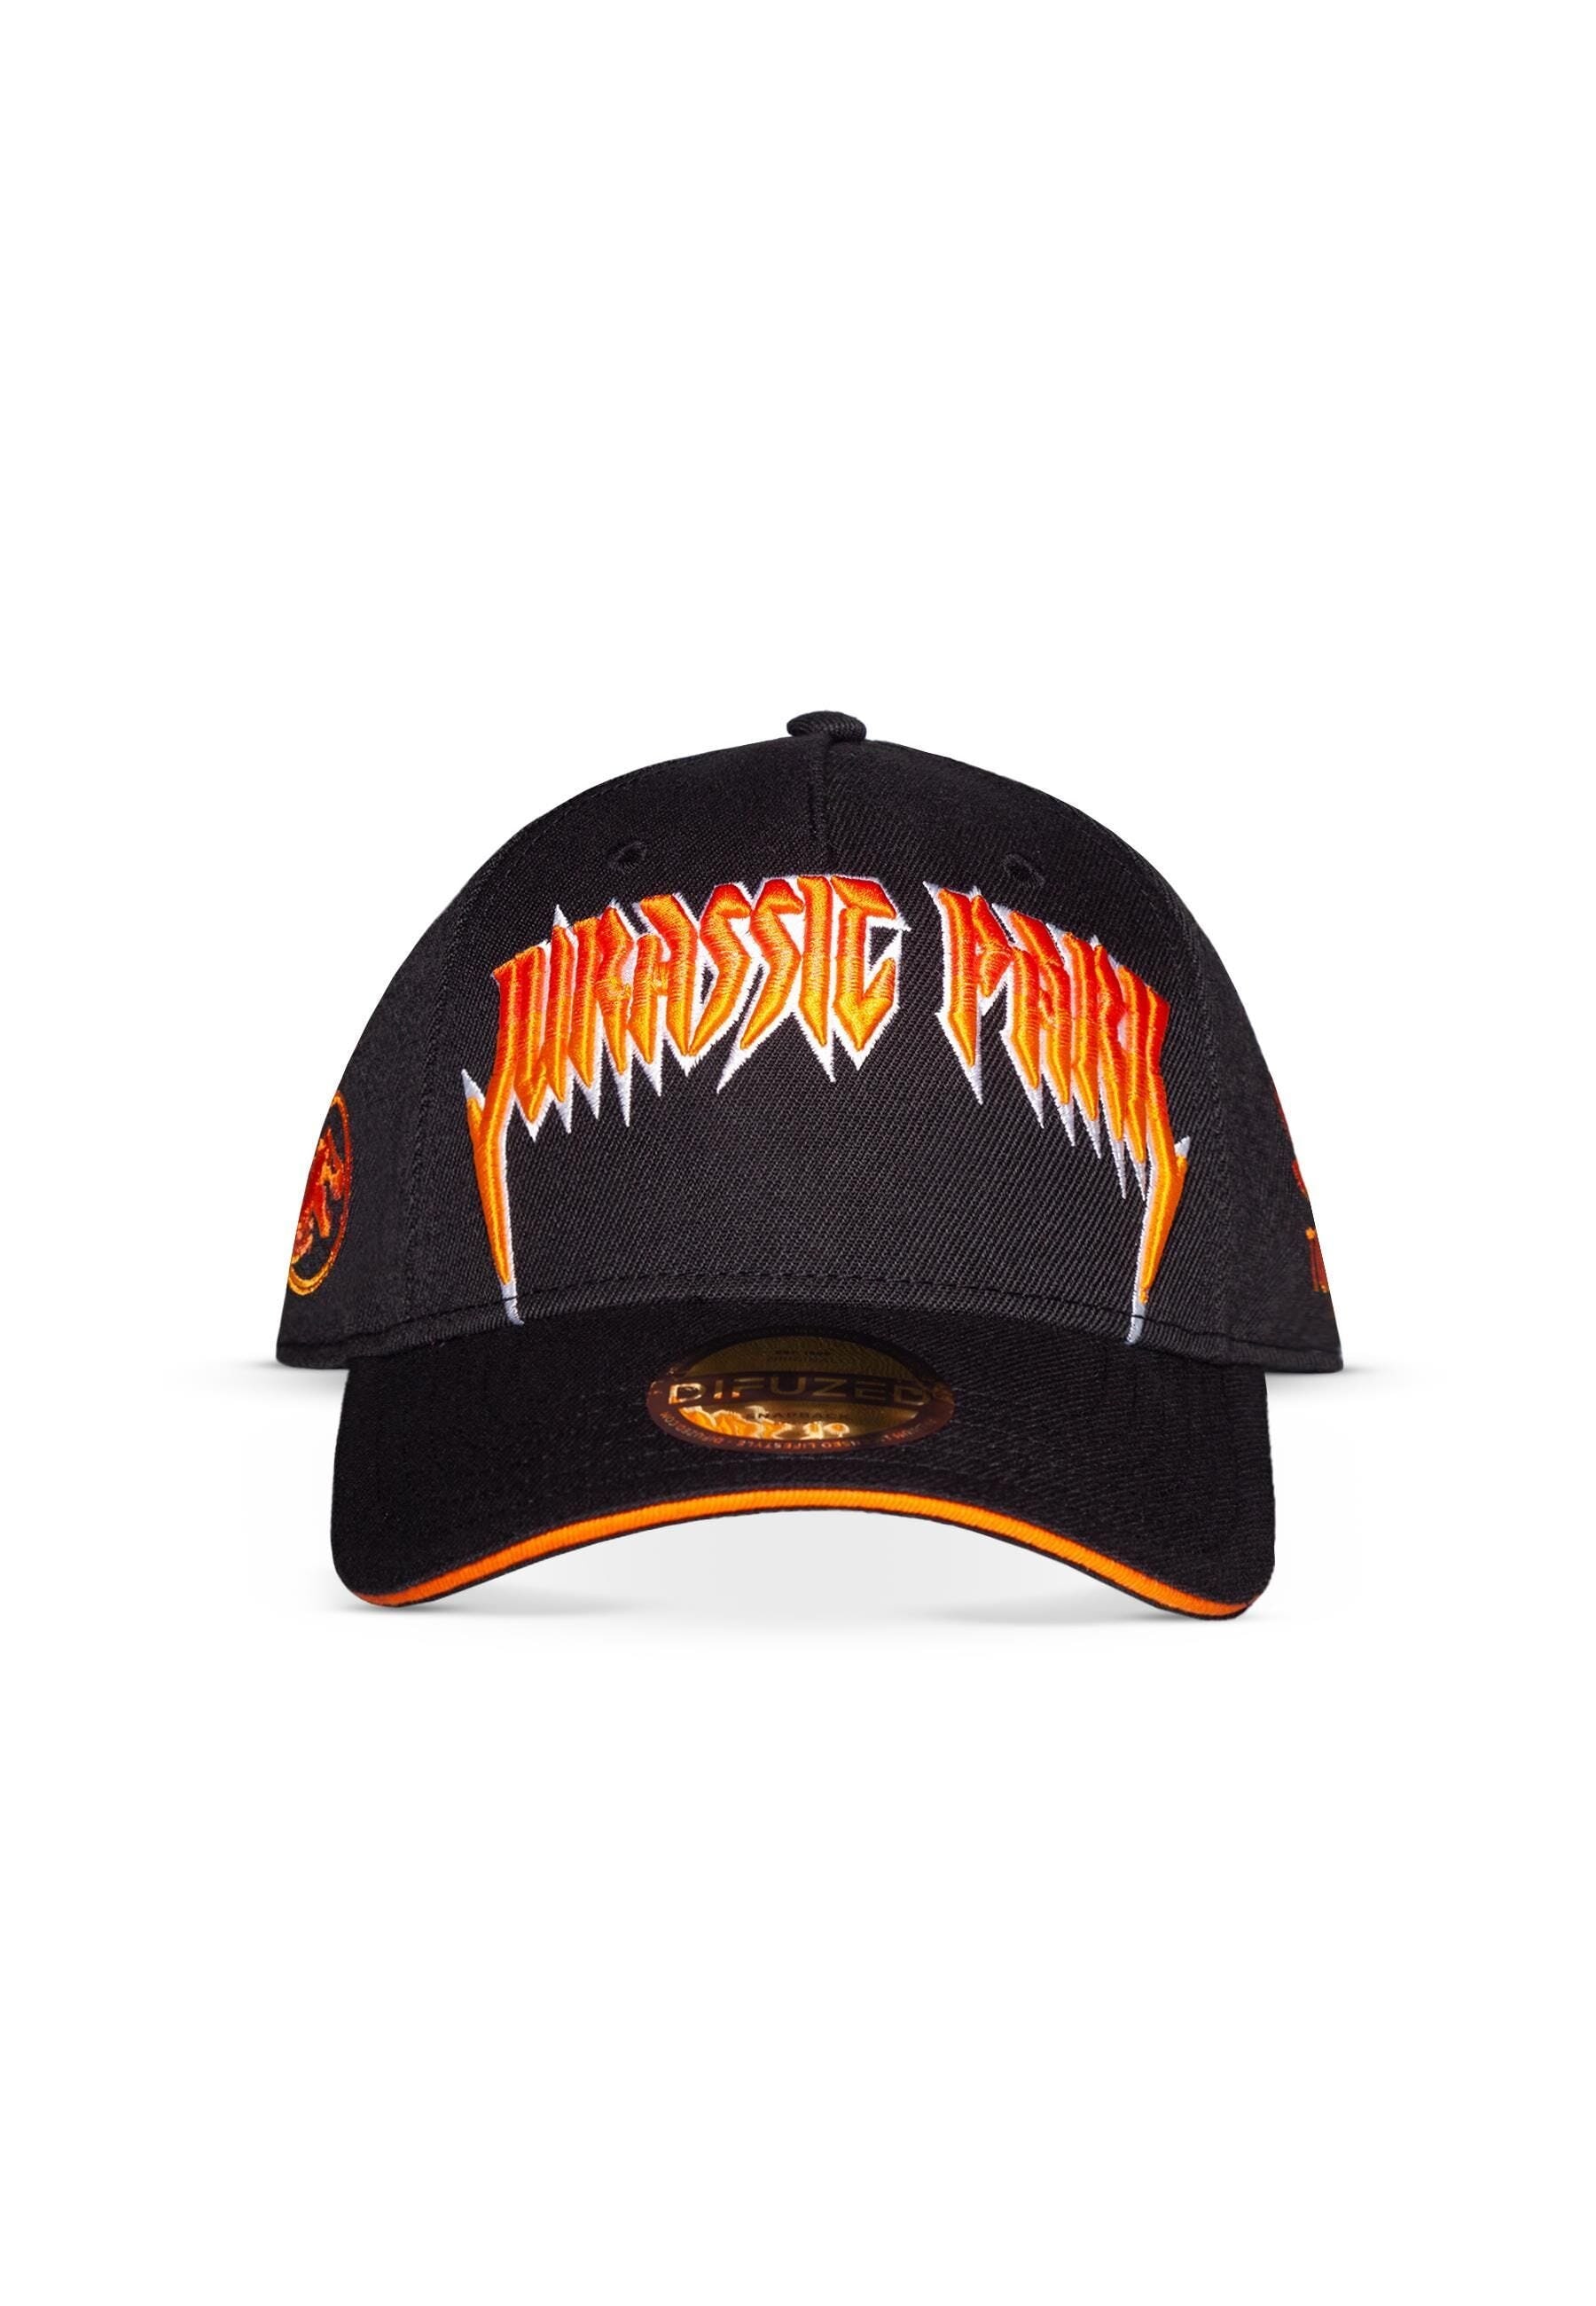 Jurassic Park - Caps Logo Snapback